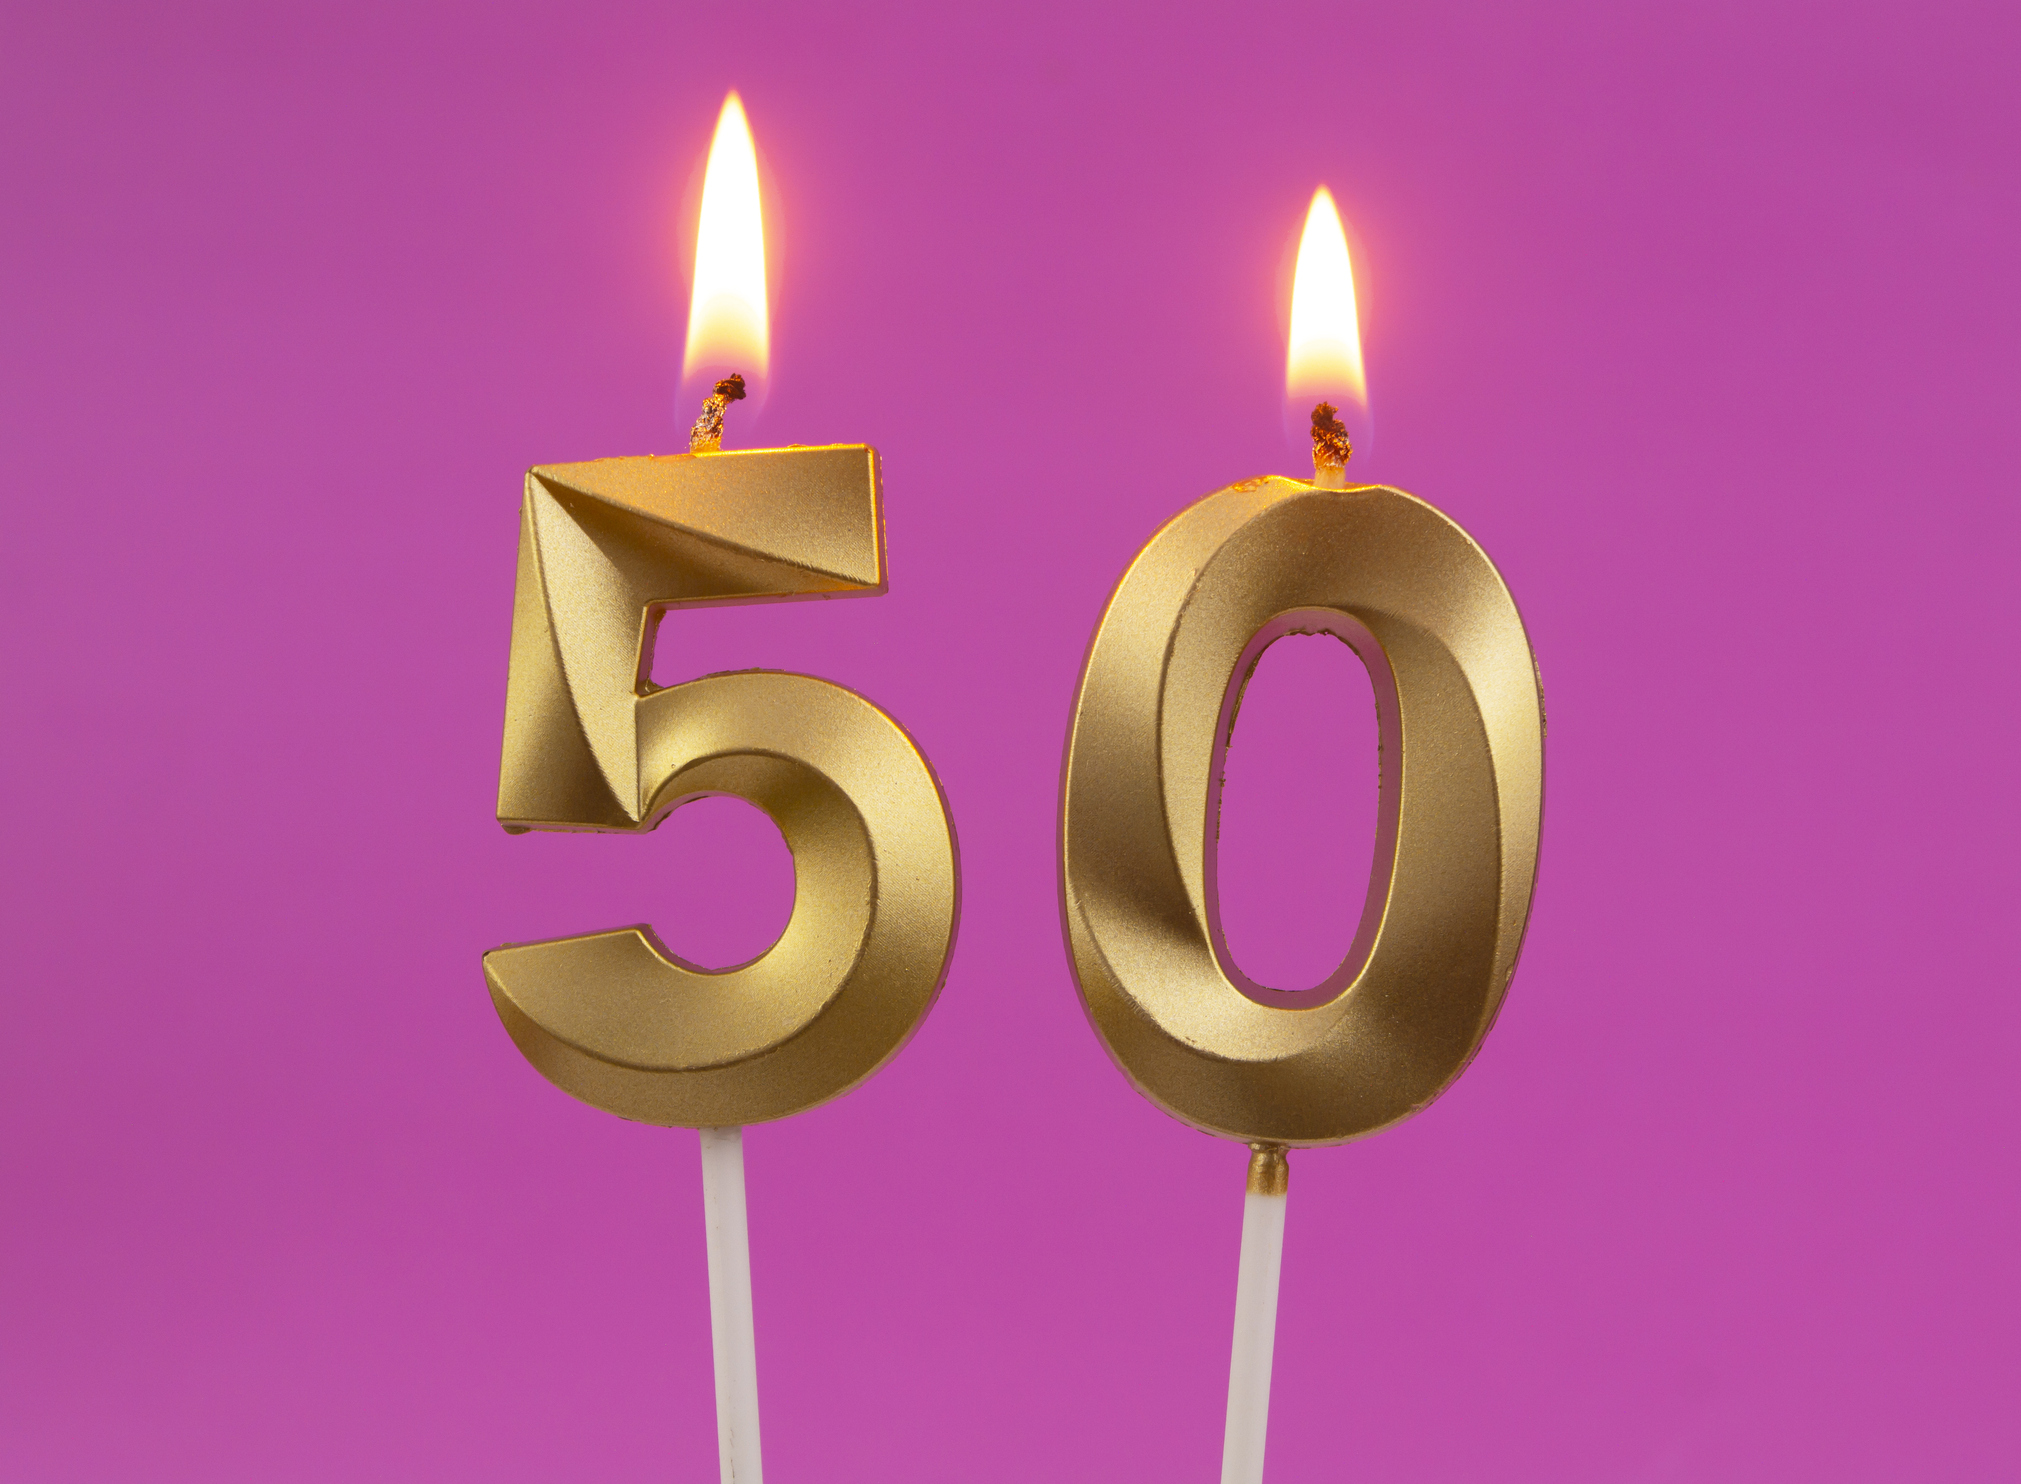 Important Birthdays Over 50